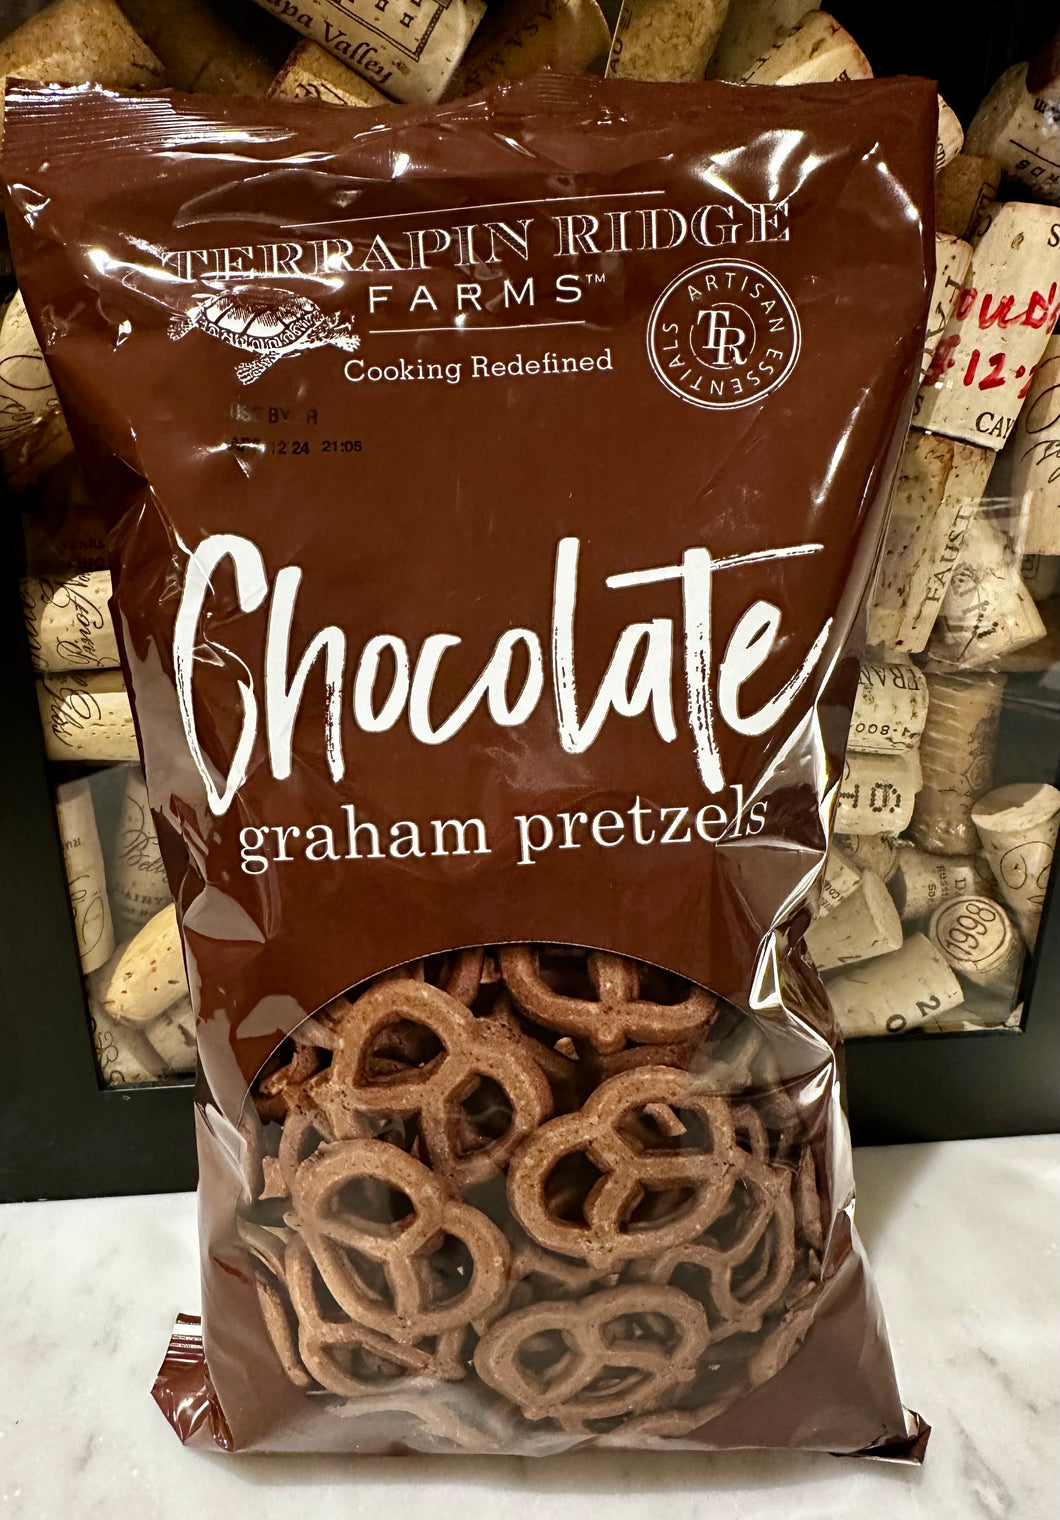 Chocolate Graham Pretzel